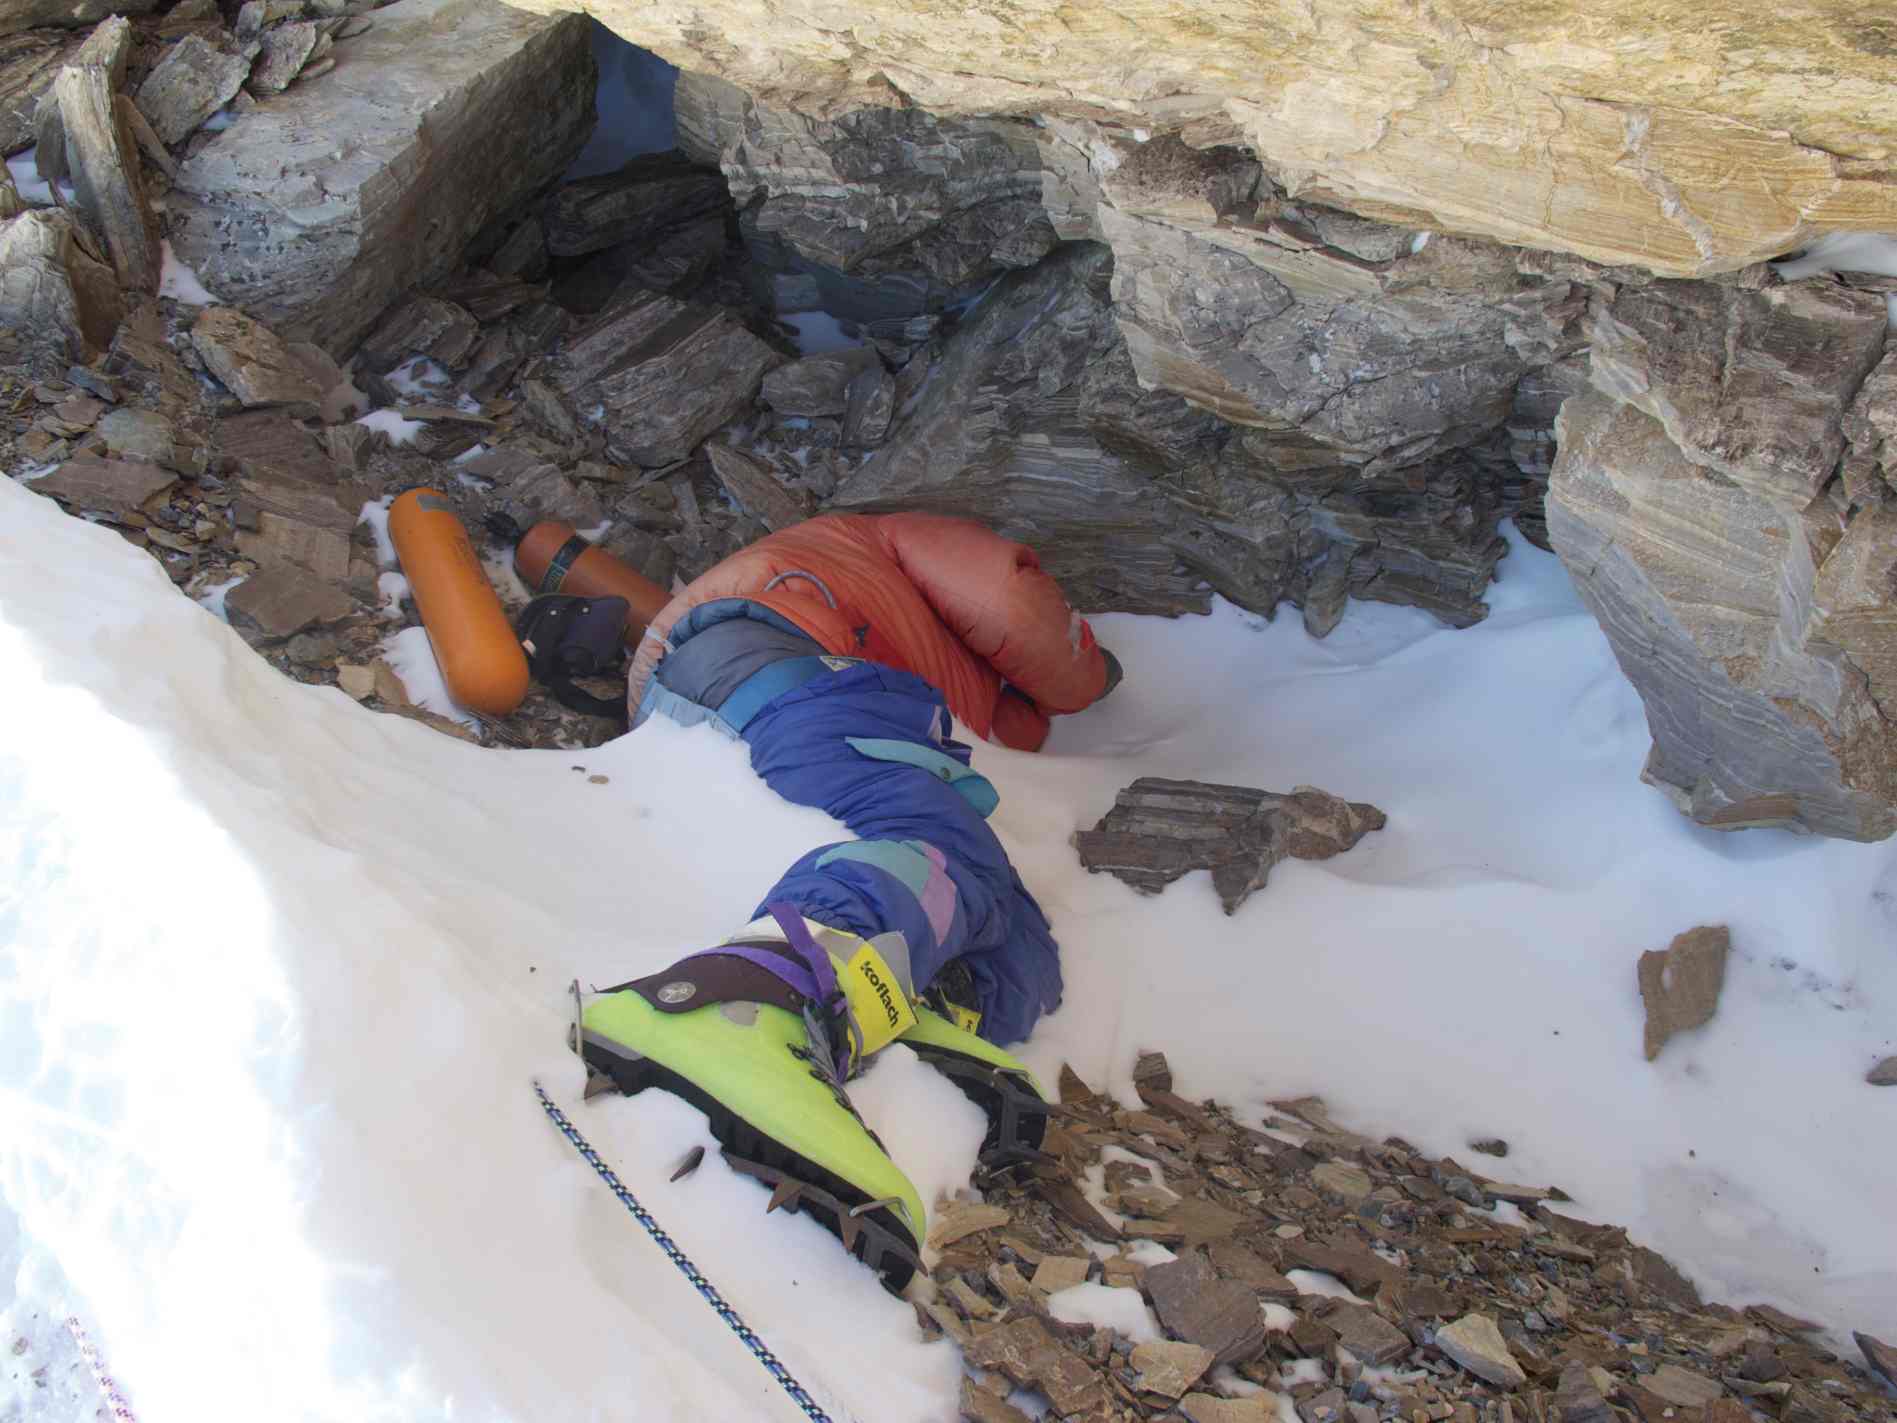 Poto "Green Boots", pendaki India anu tilar dunya di Northeast Ridge of Mt. Everest di 1996